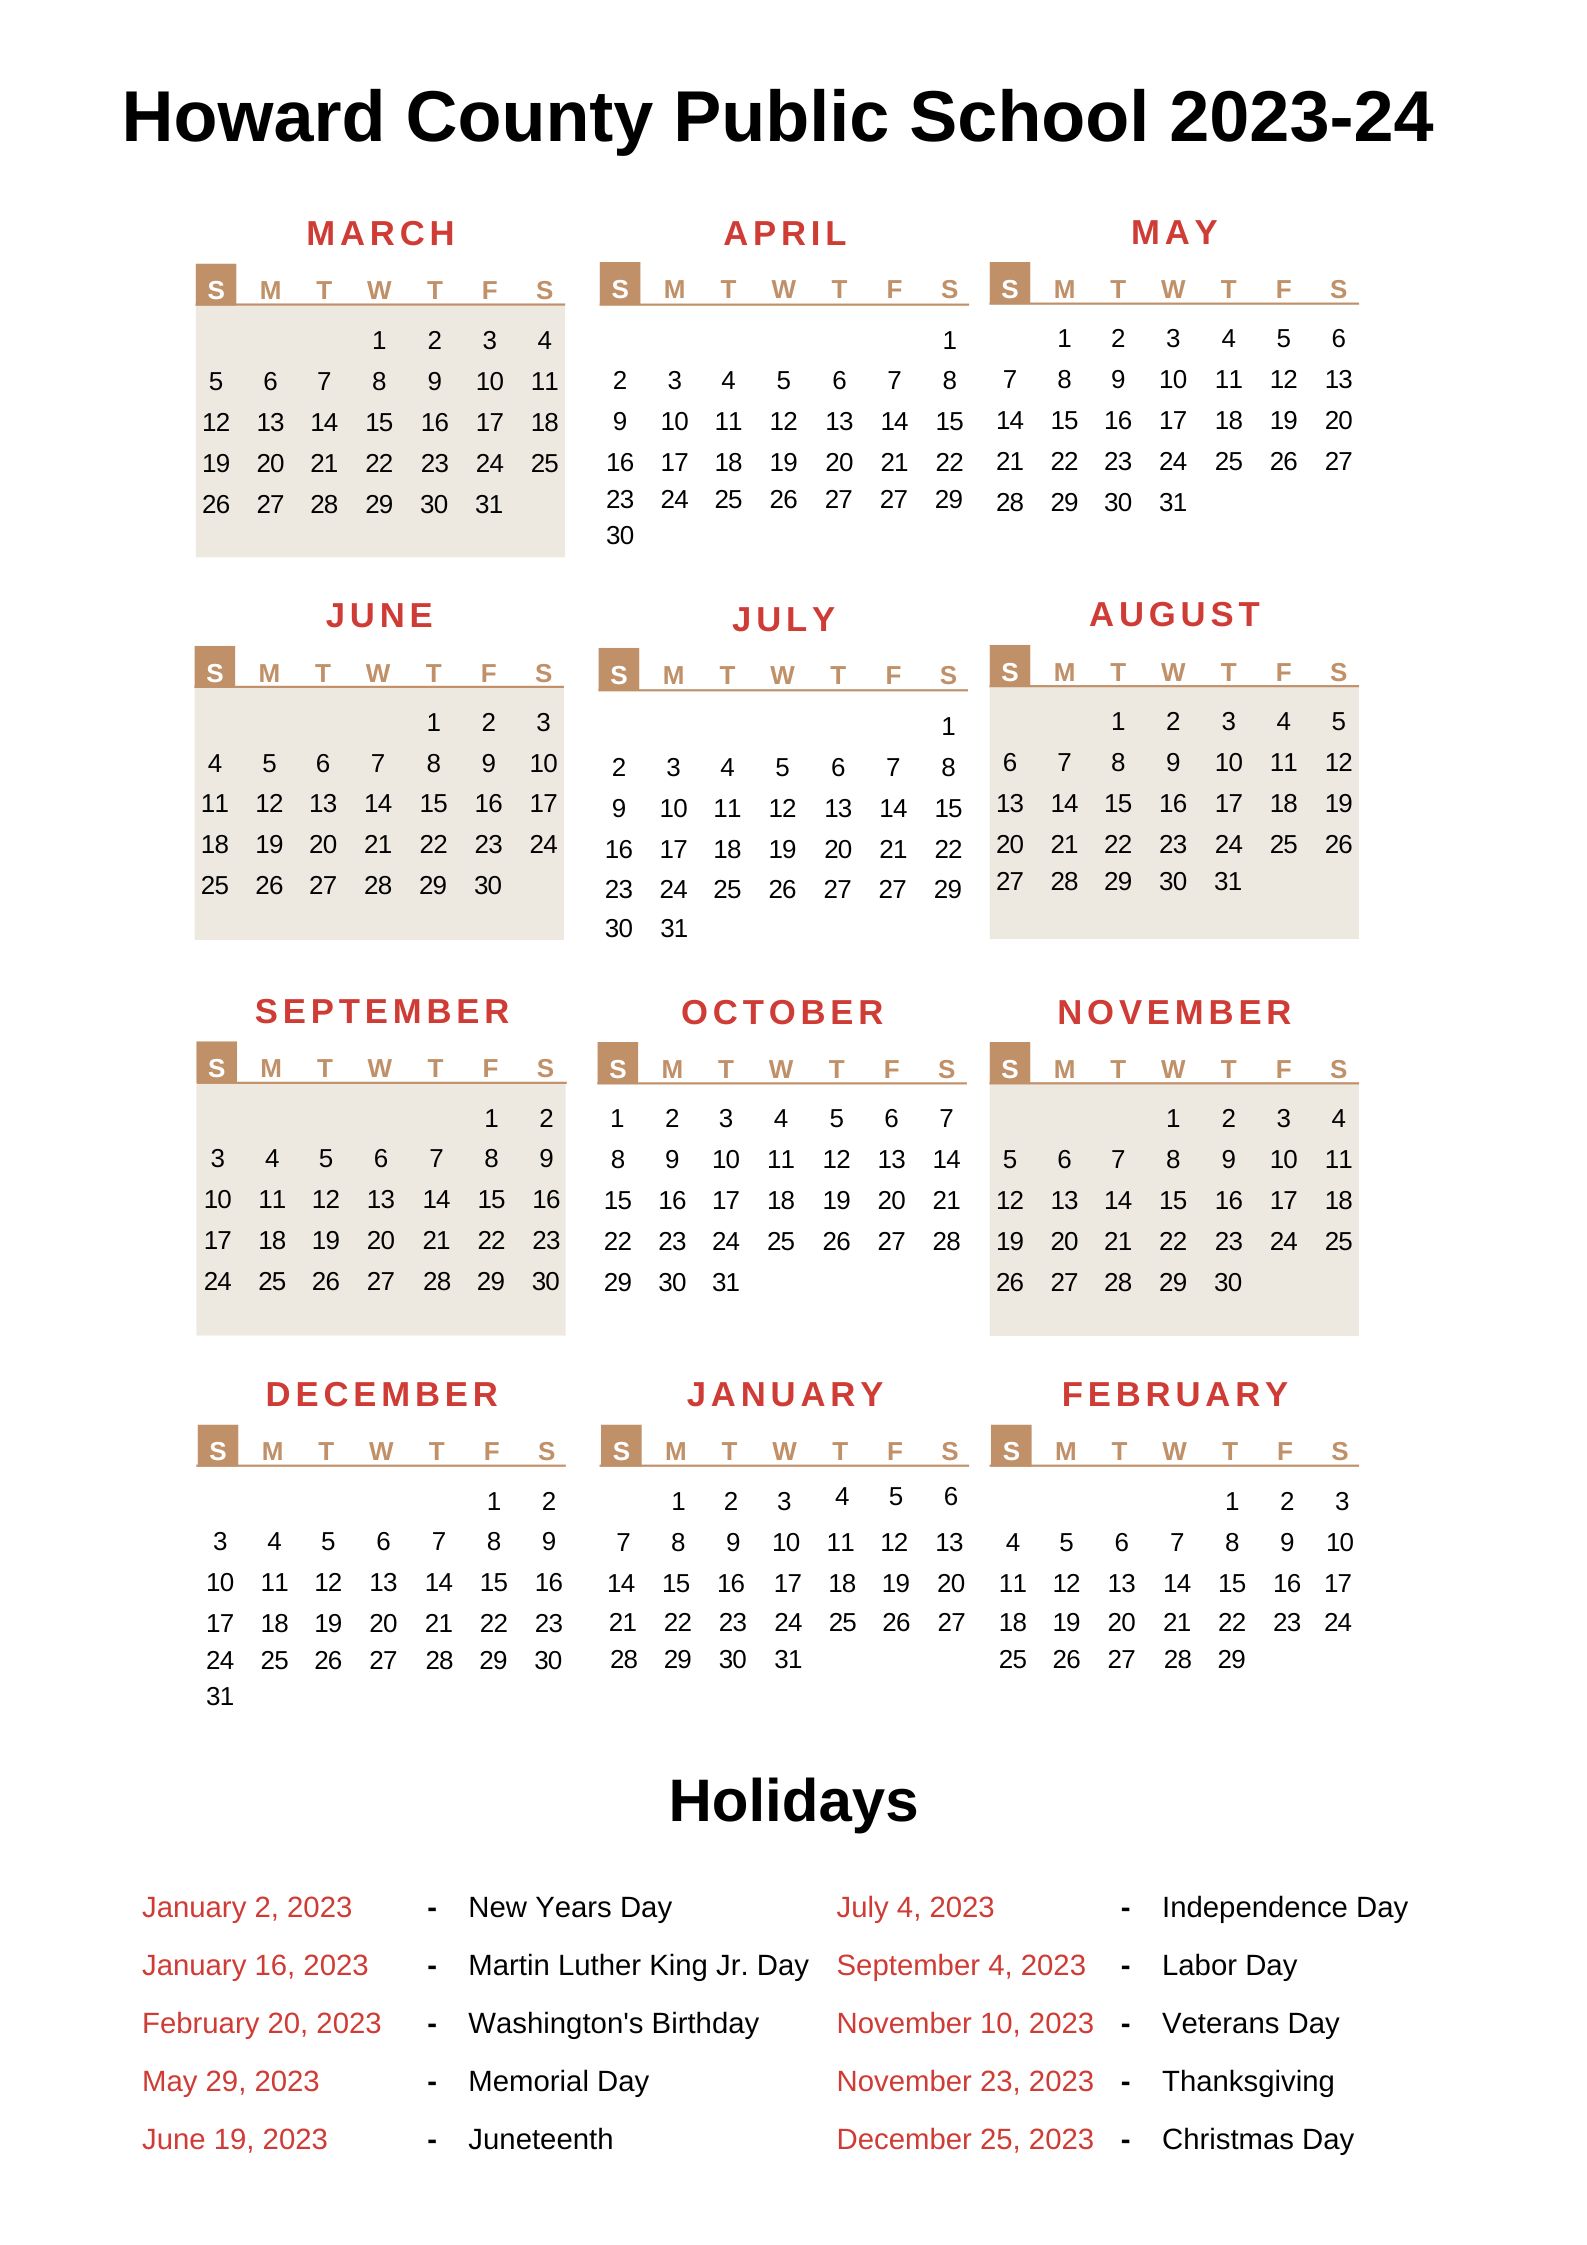 howard-county-public-schools-calendar-2023-24-with-holidays